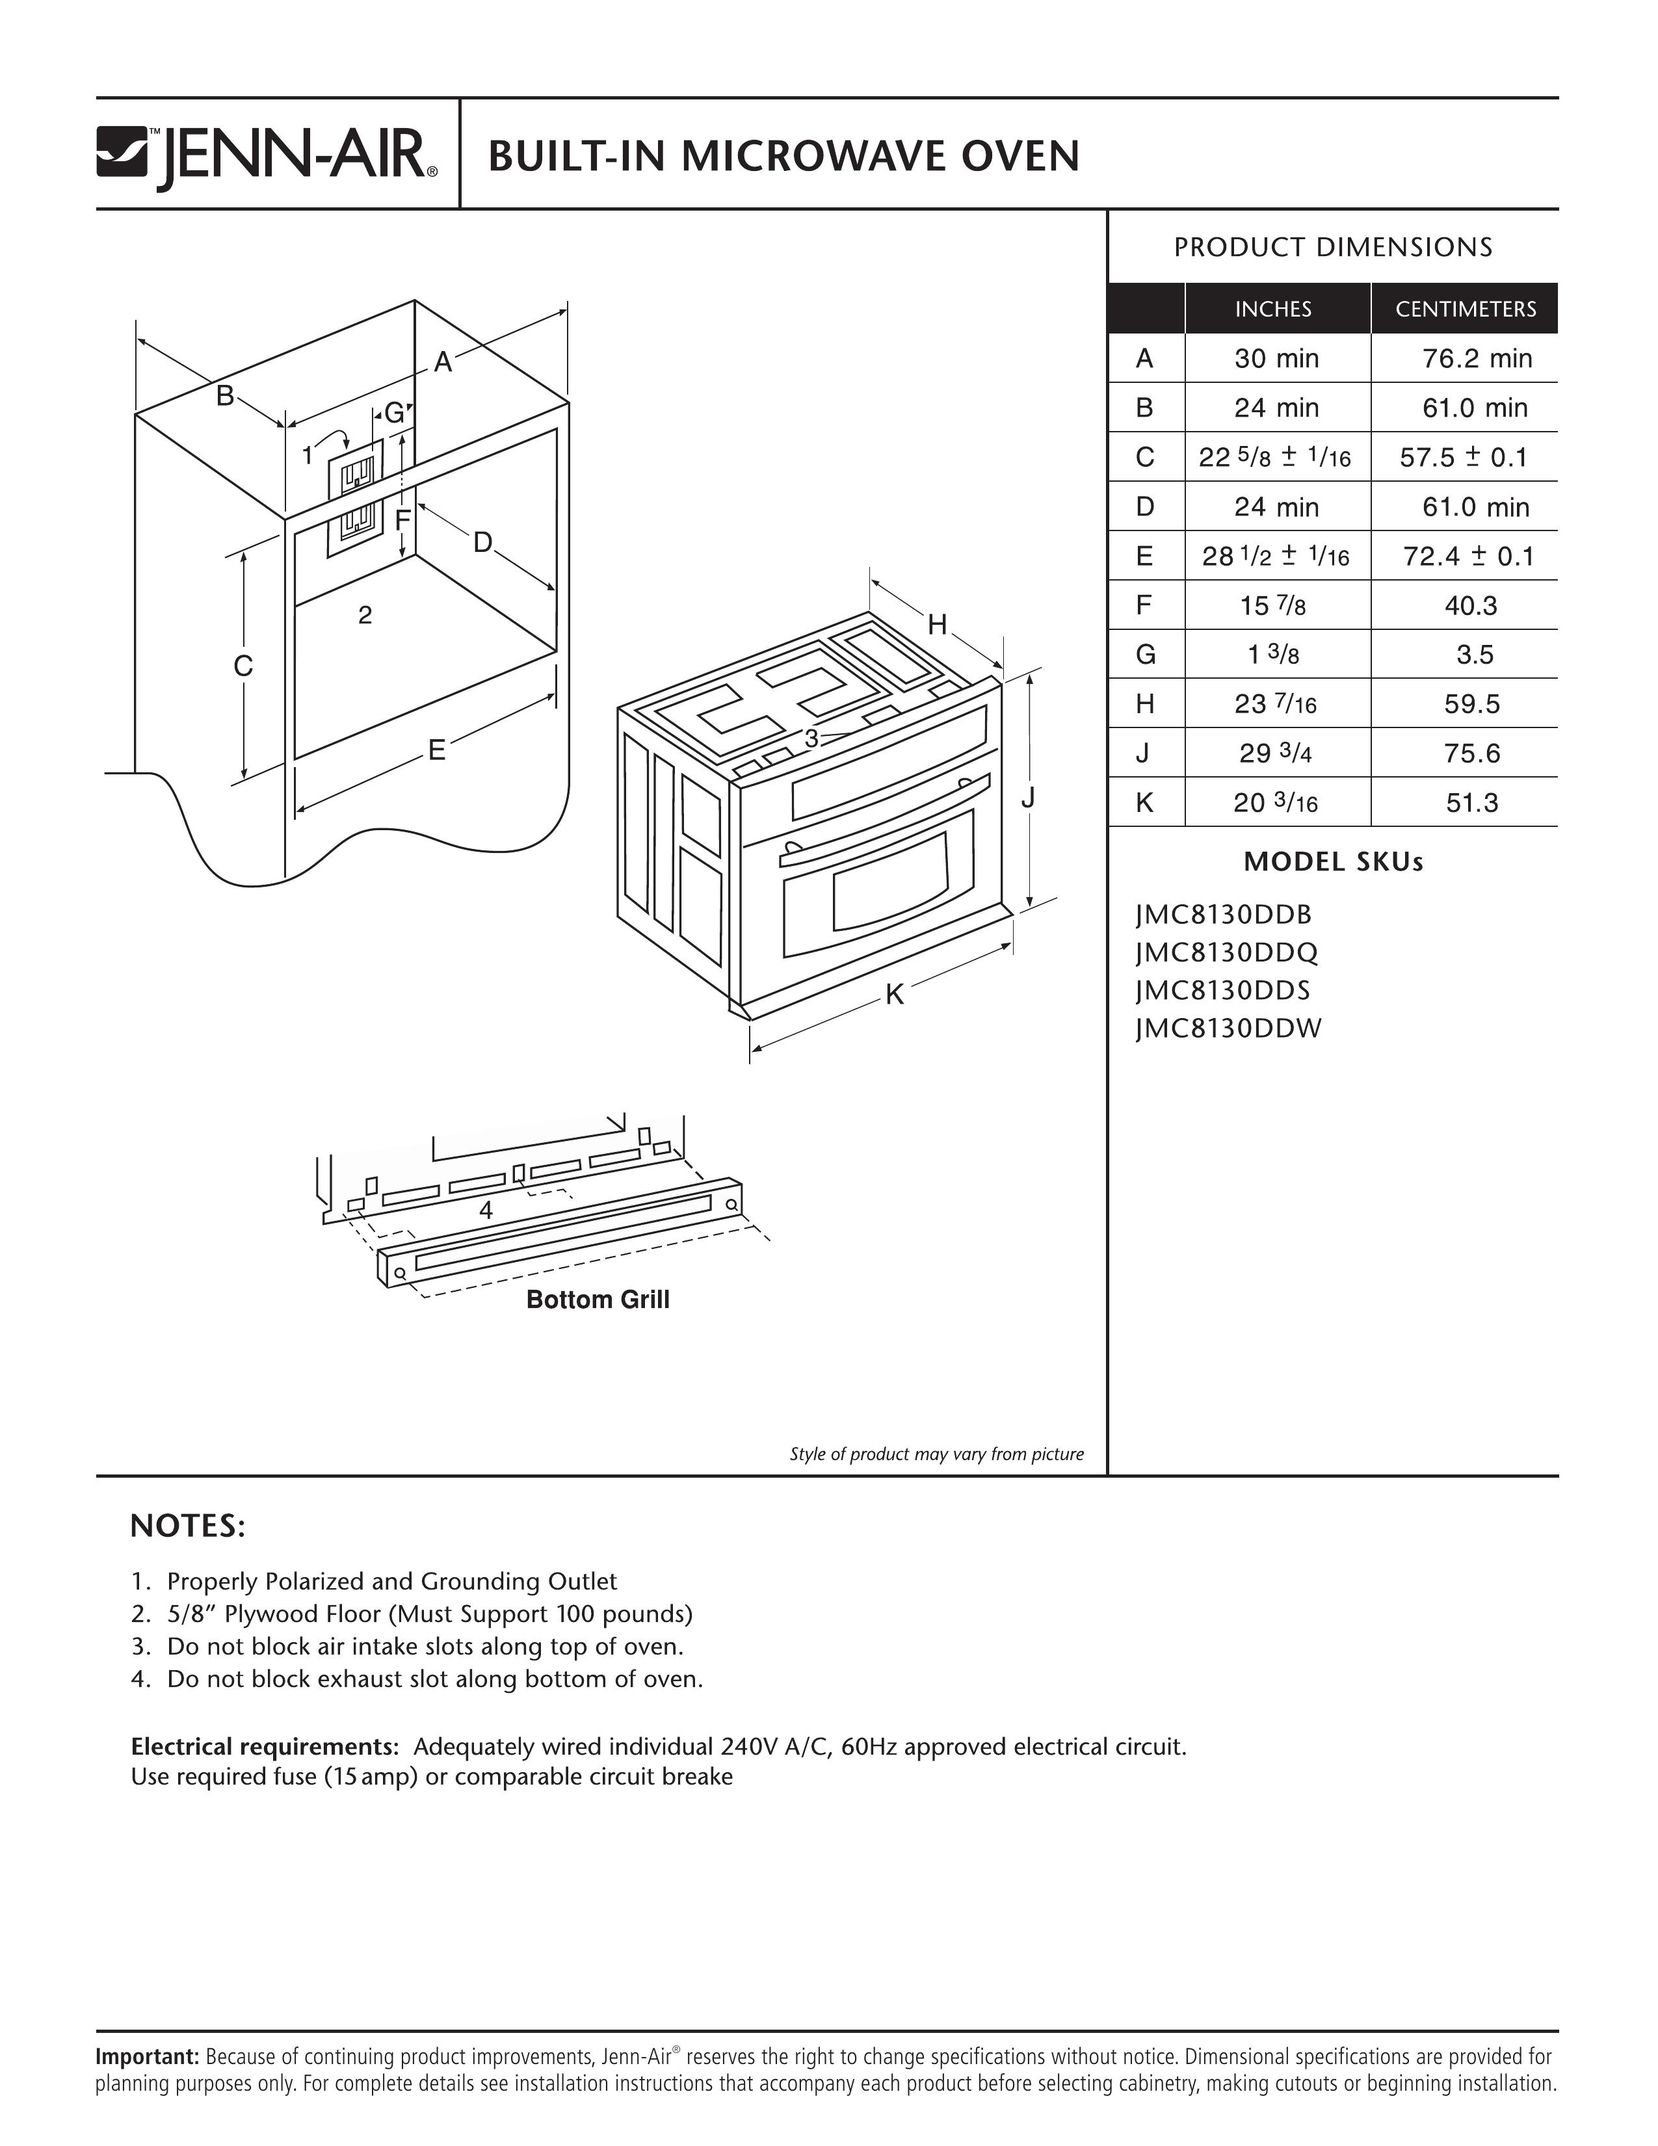 Jenn-Air JMC8130DDW Microwave Oven User Manual